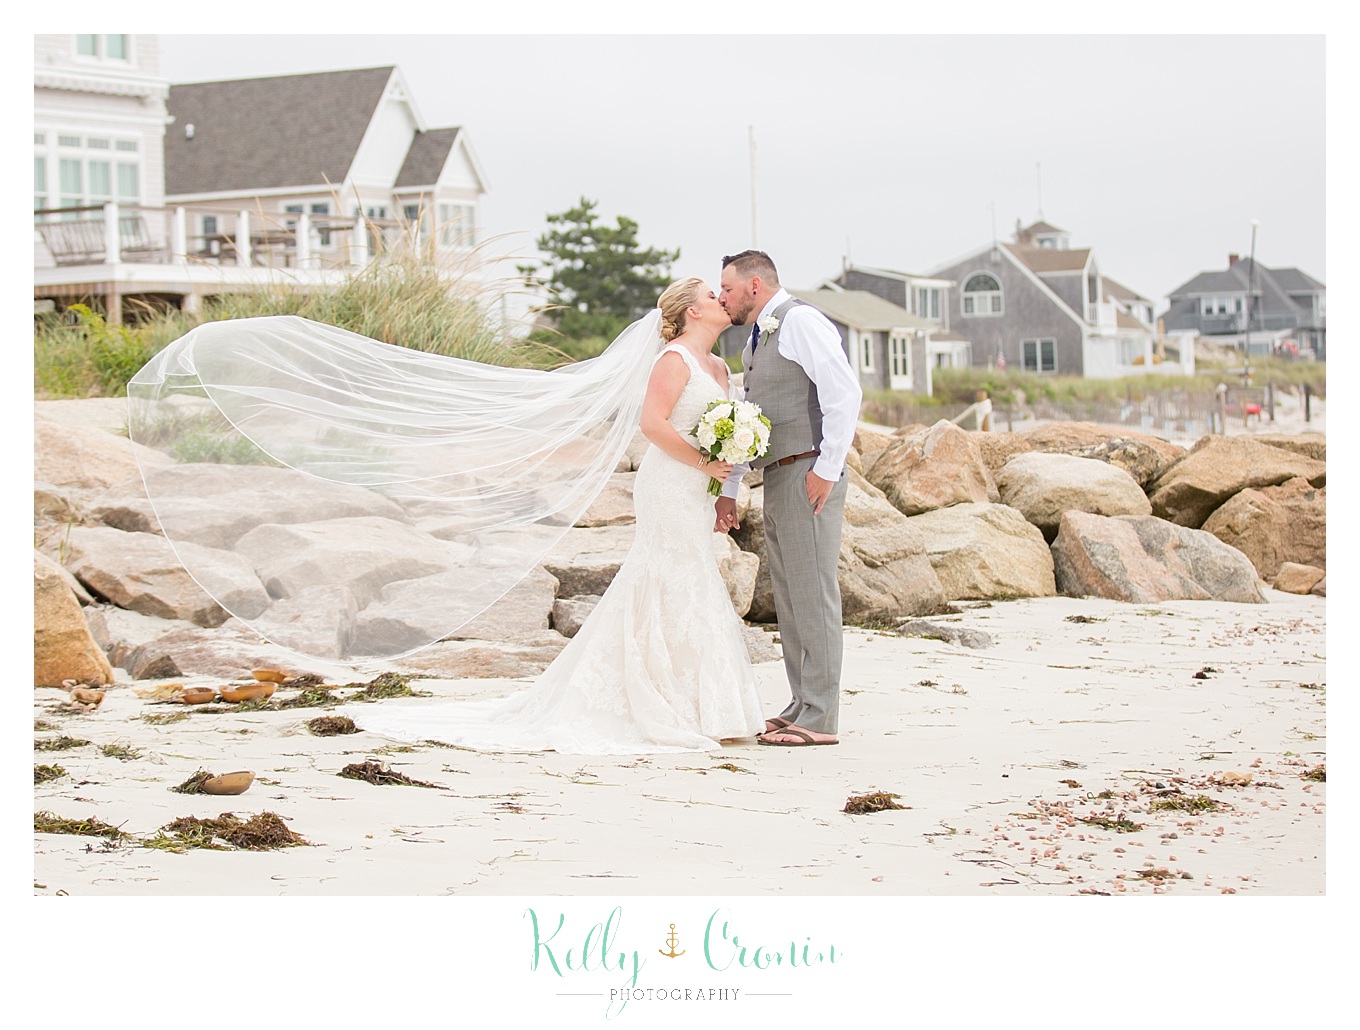 A bride's veil floats on the breeze | Kelly Cronin Photography | Lighthouse Inn